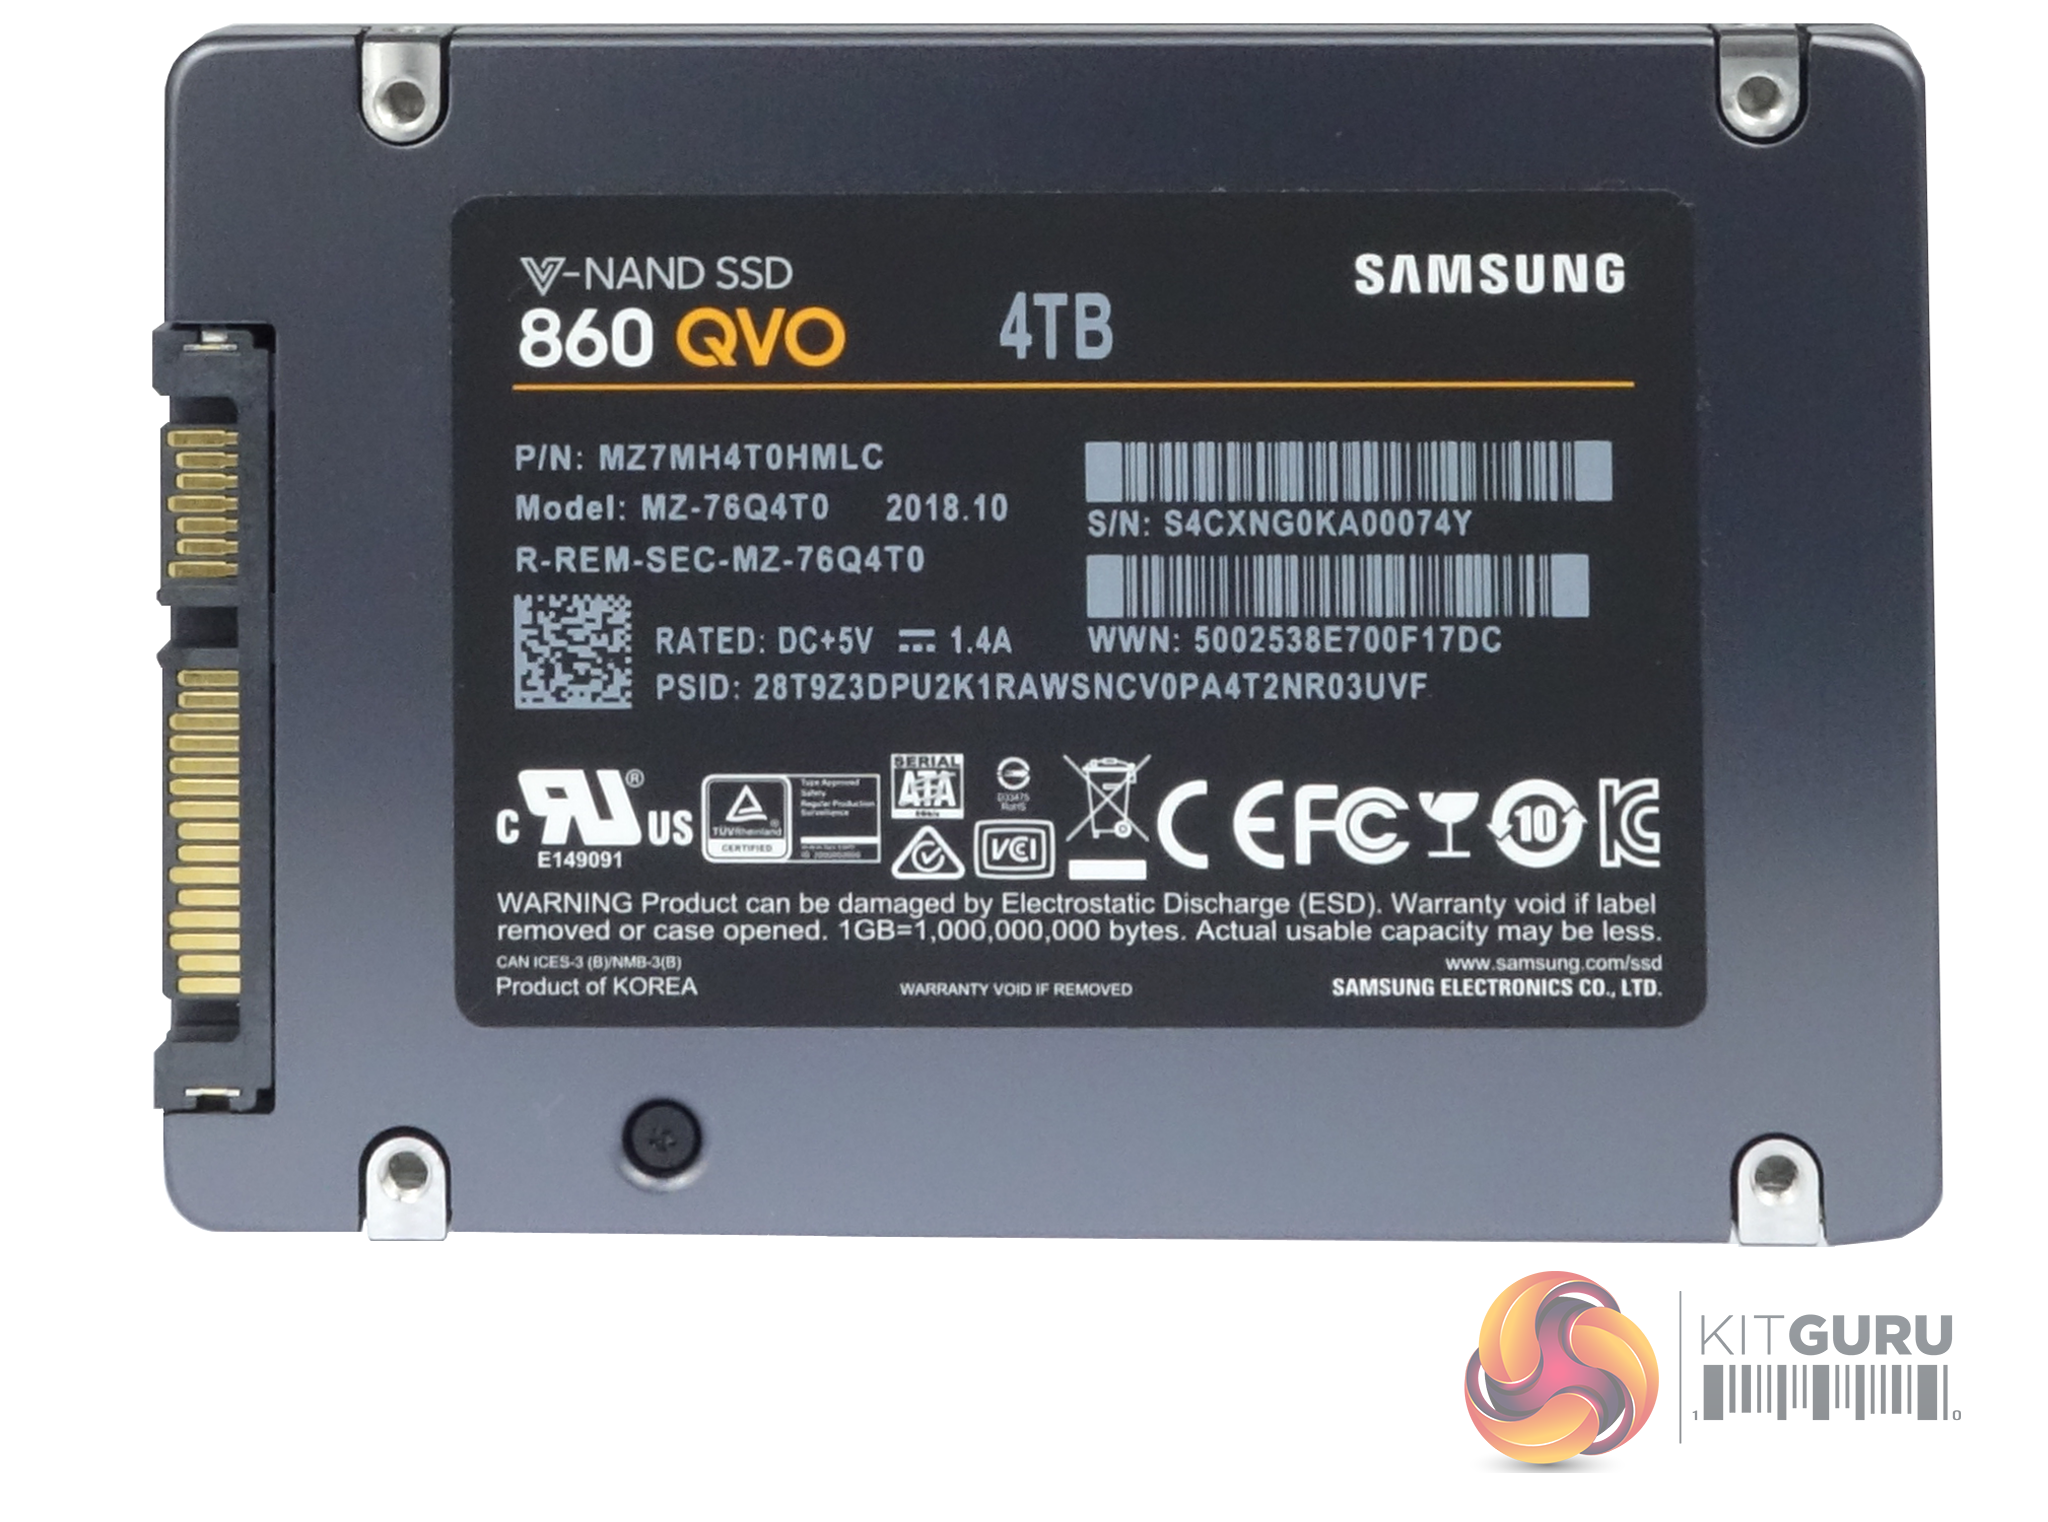 Samsung 860 QVO 4TB SSD Review | KitGuru